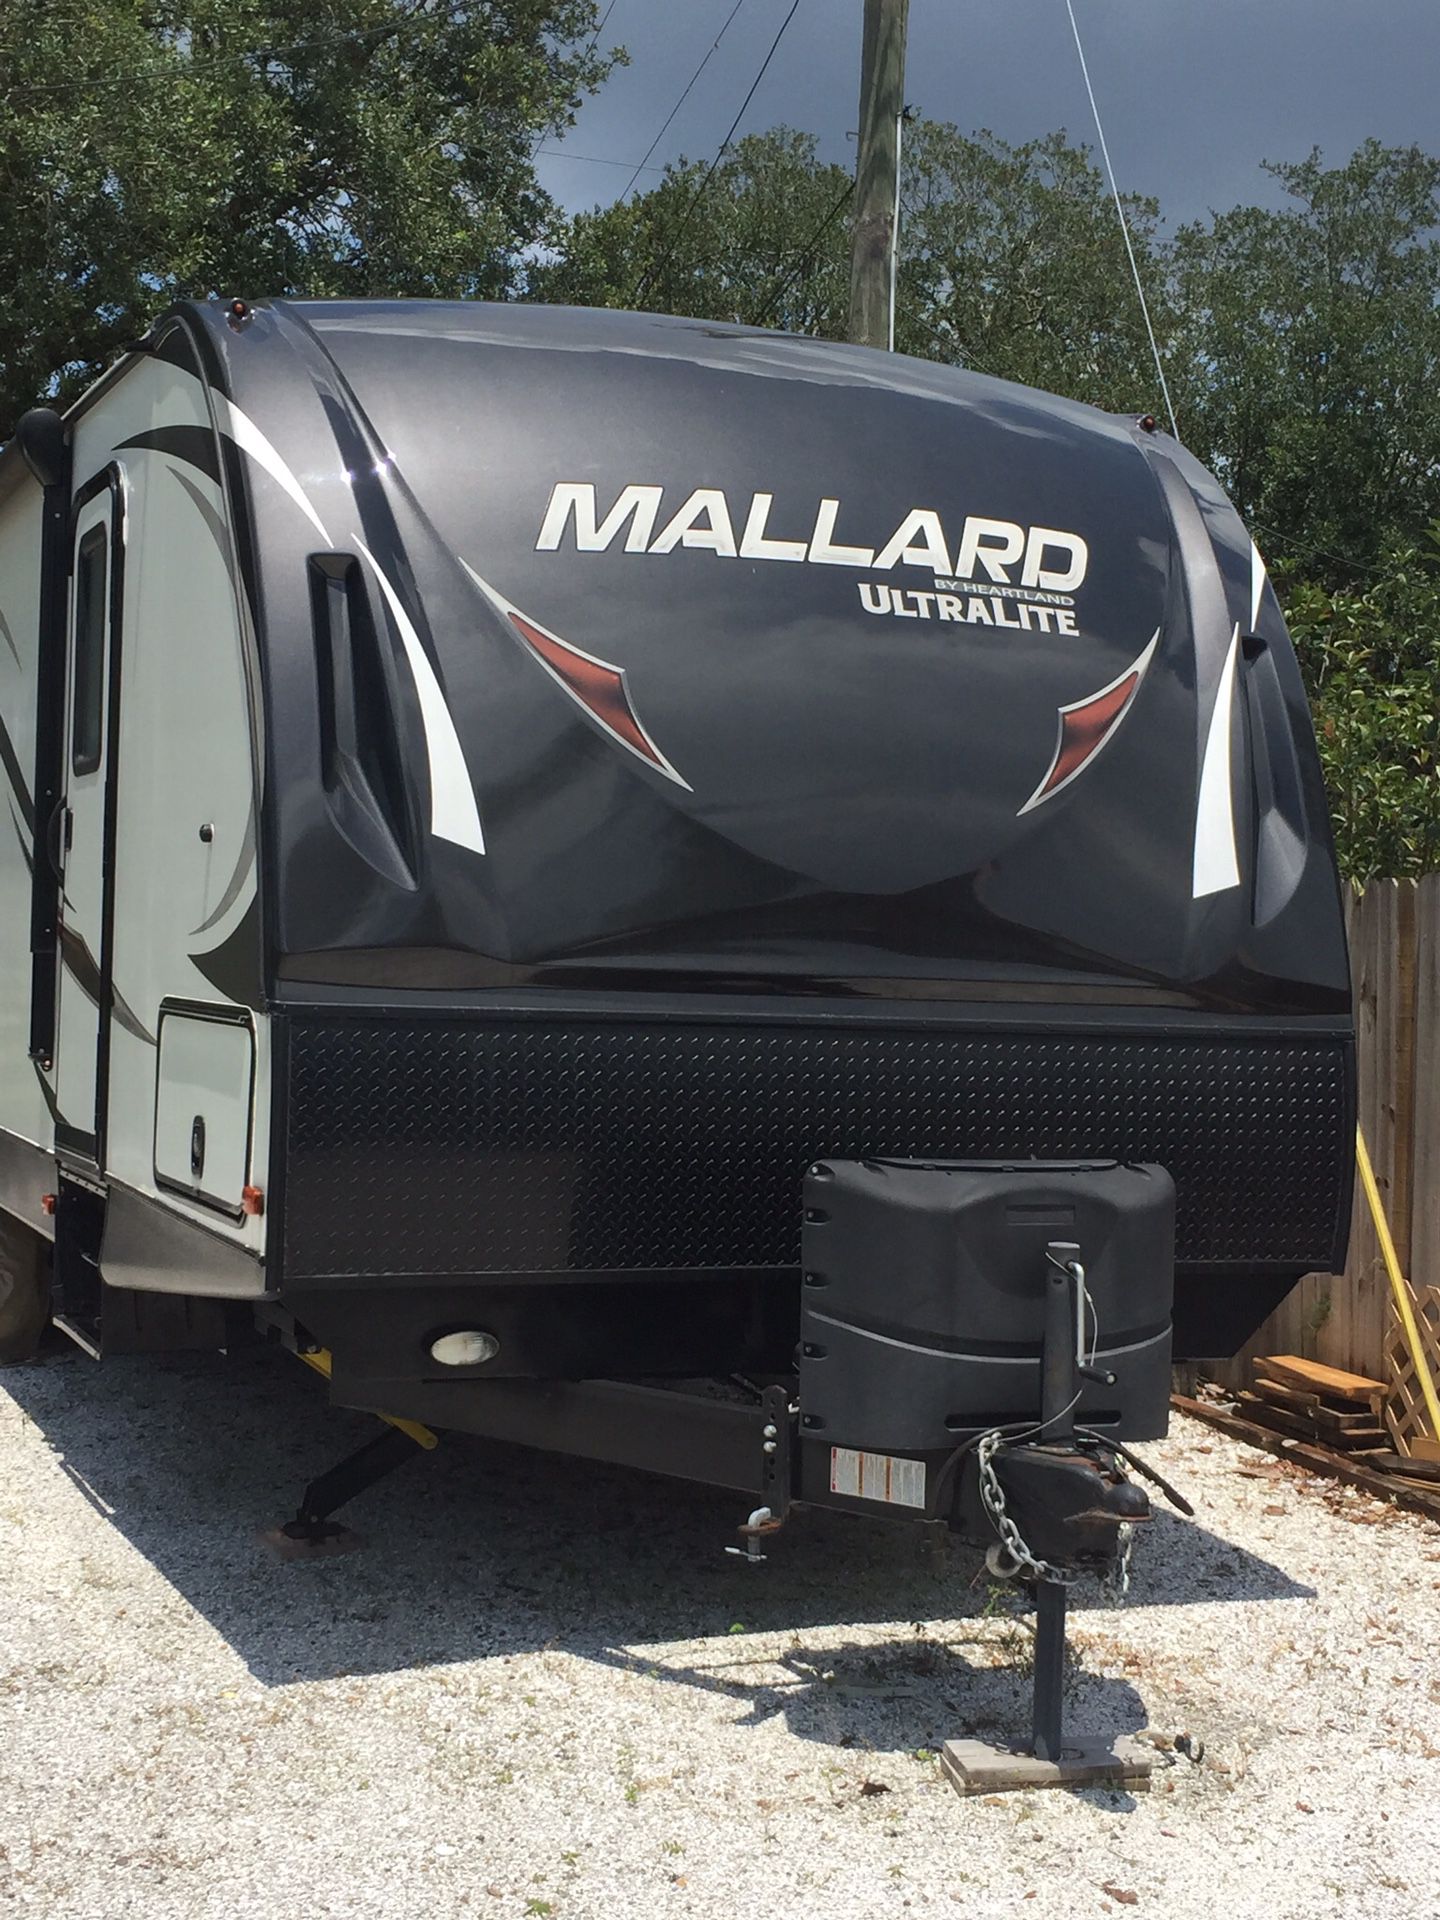 Heartland Mallard Ultralite camper